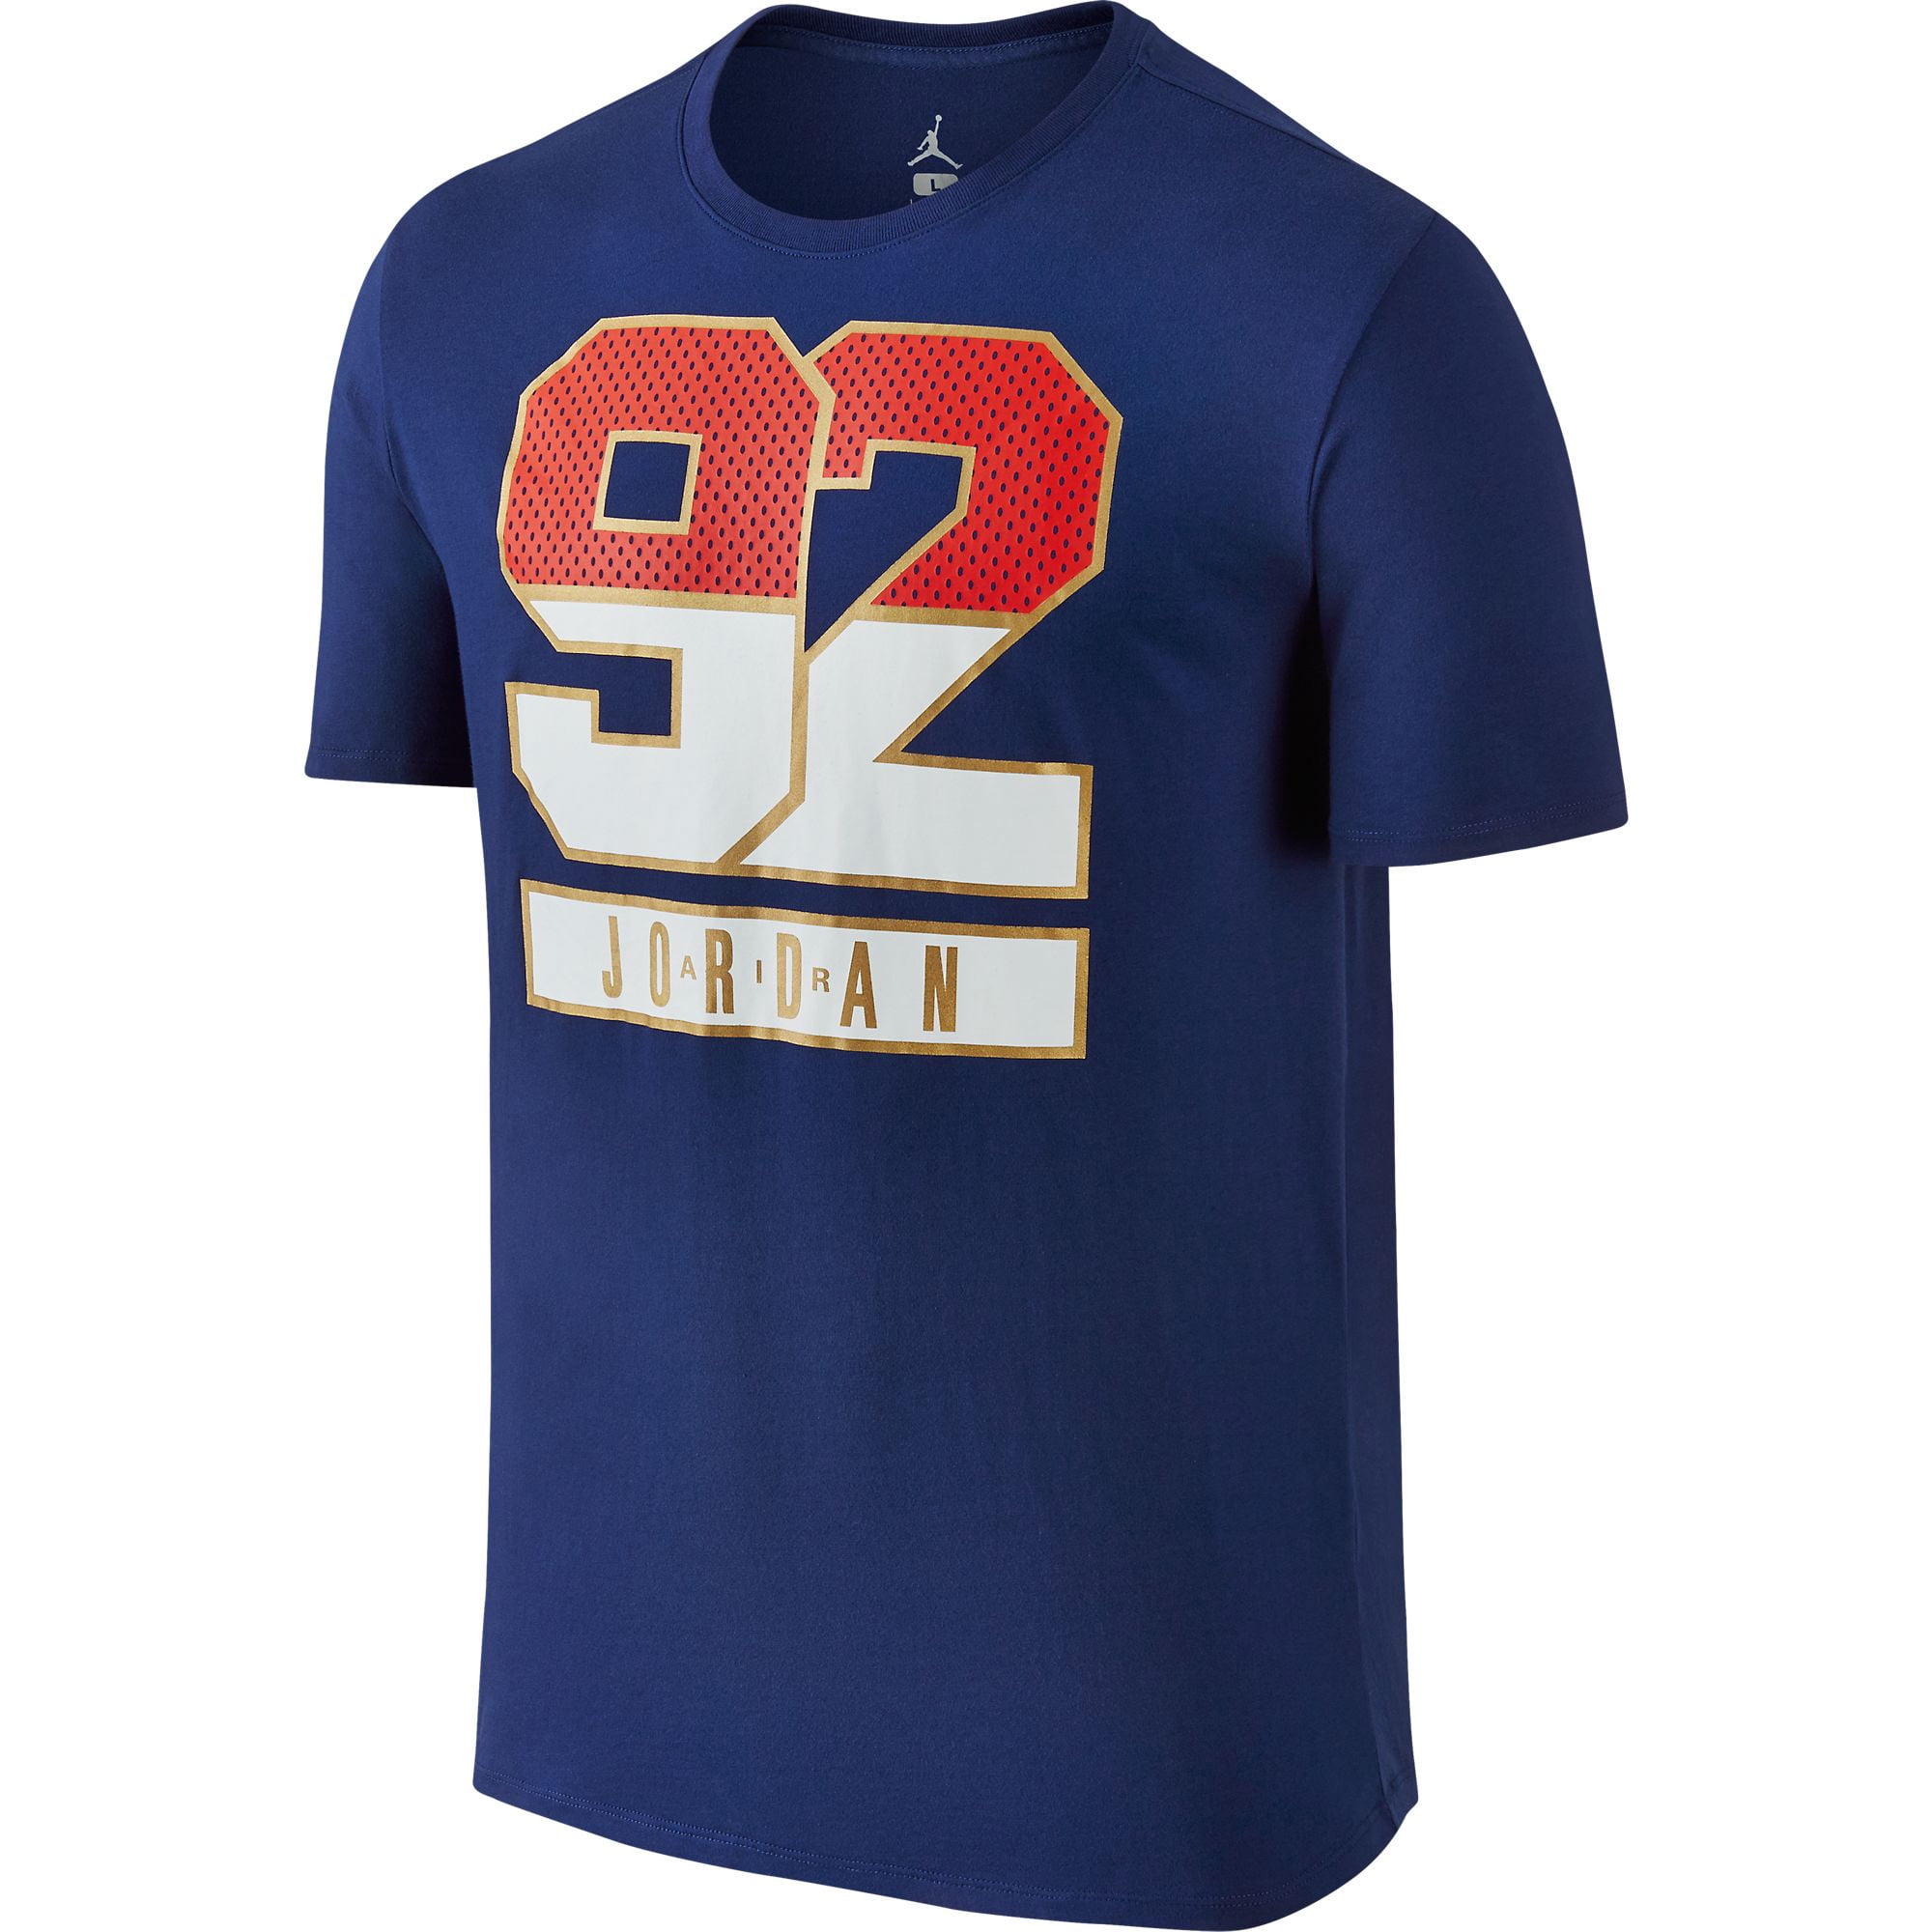 Air Jordan 7 Retro 92 Men's T-Shirt Blue-Red 801122-455